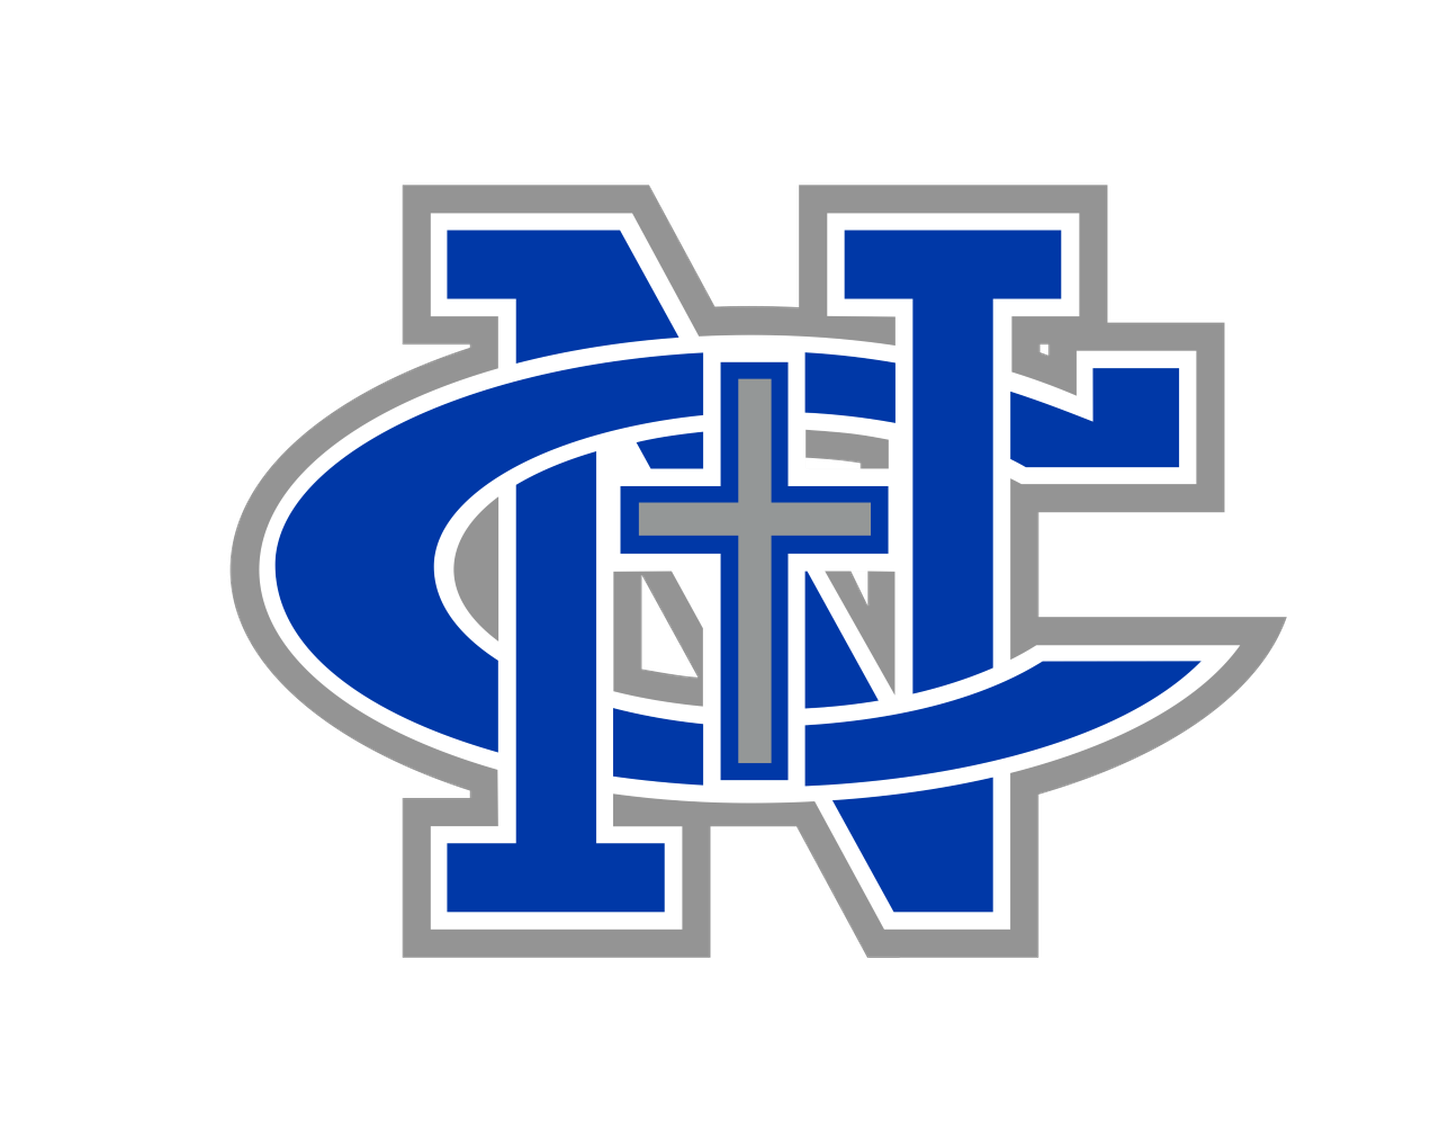 Newman Central Catholic 2022 logo.